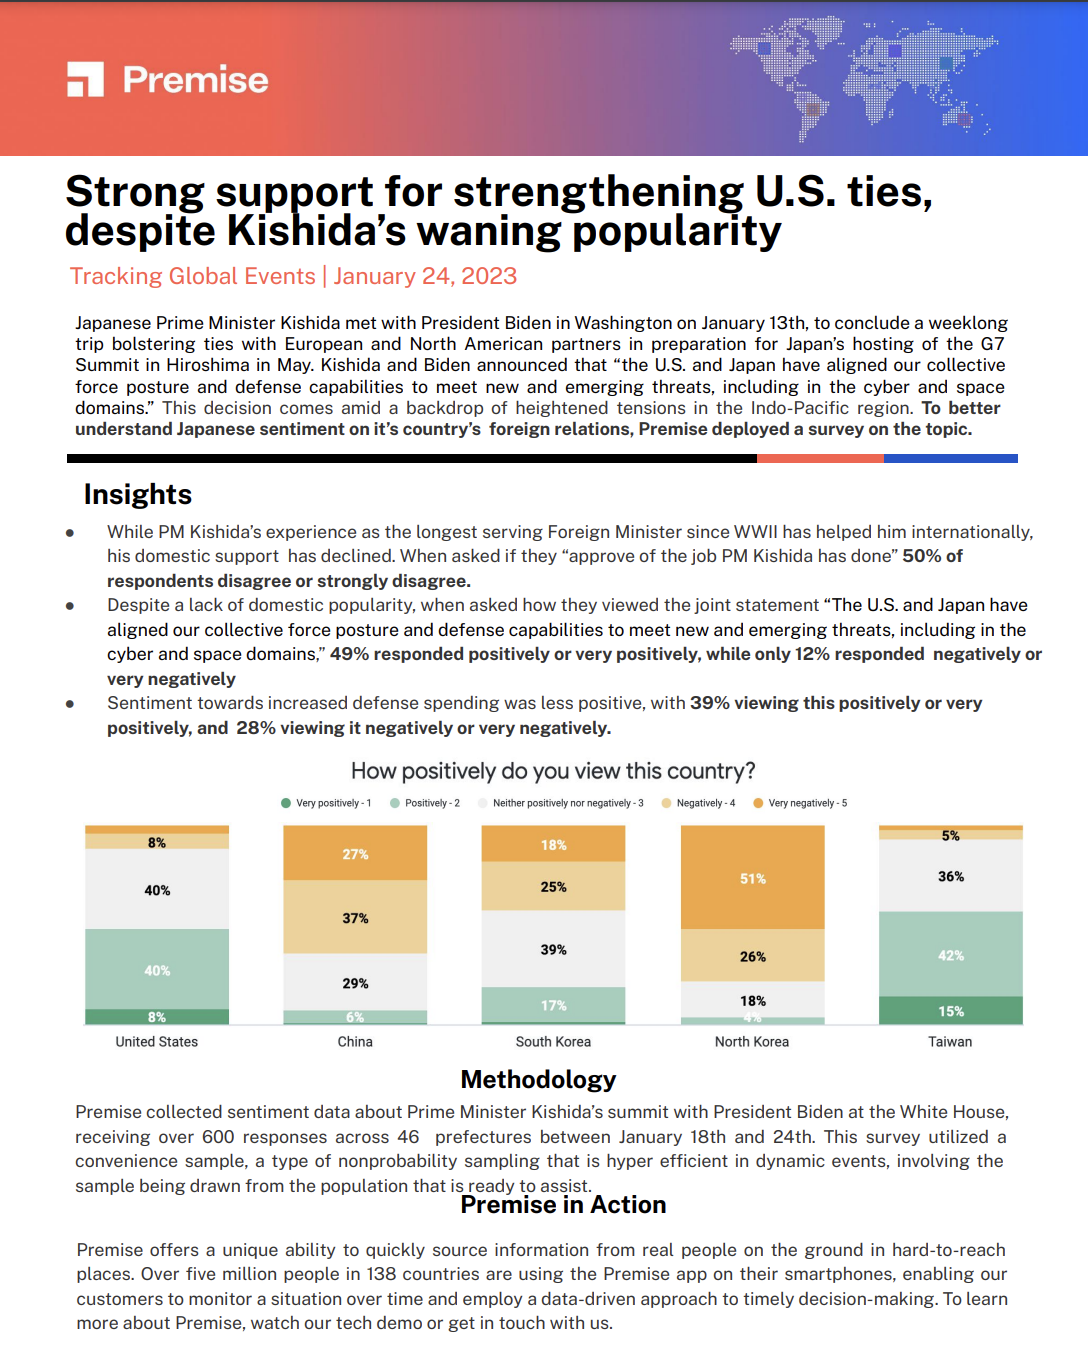 Strong Support for Strengthening U.S. Ties, Despite Kishida’s Waning Popularity